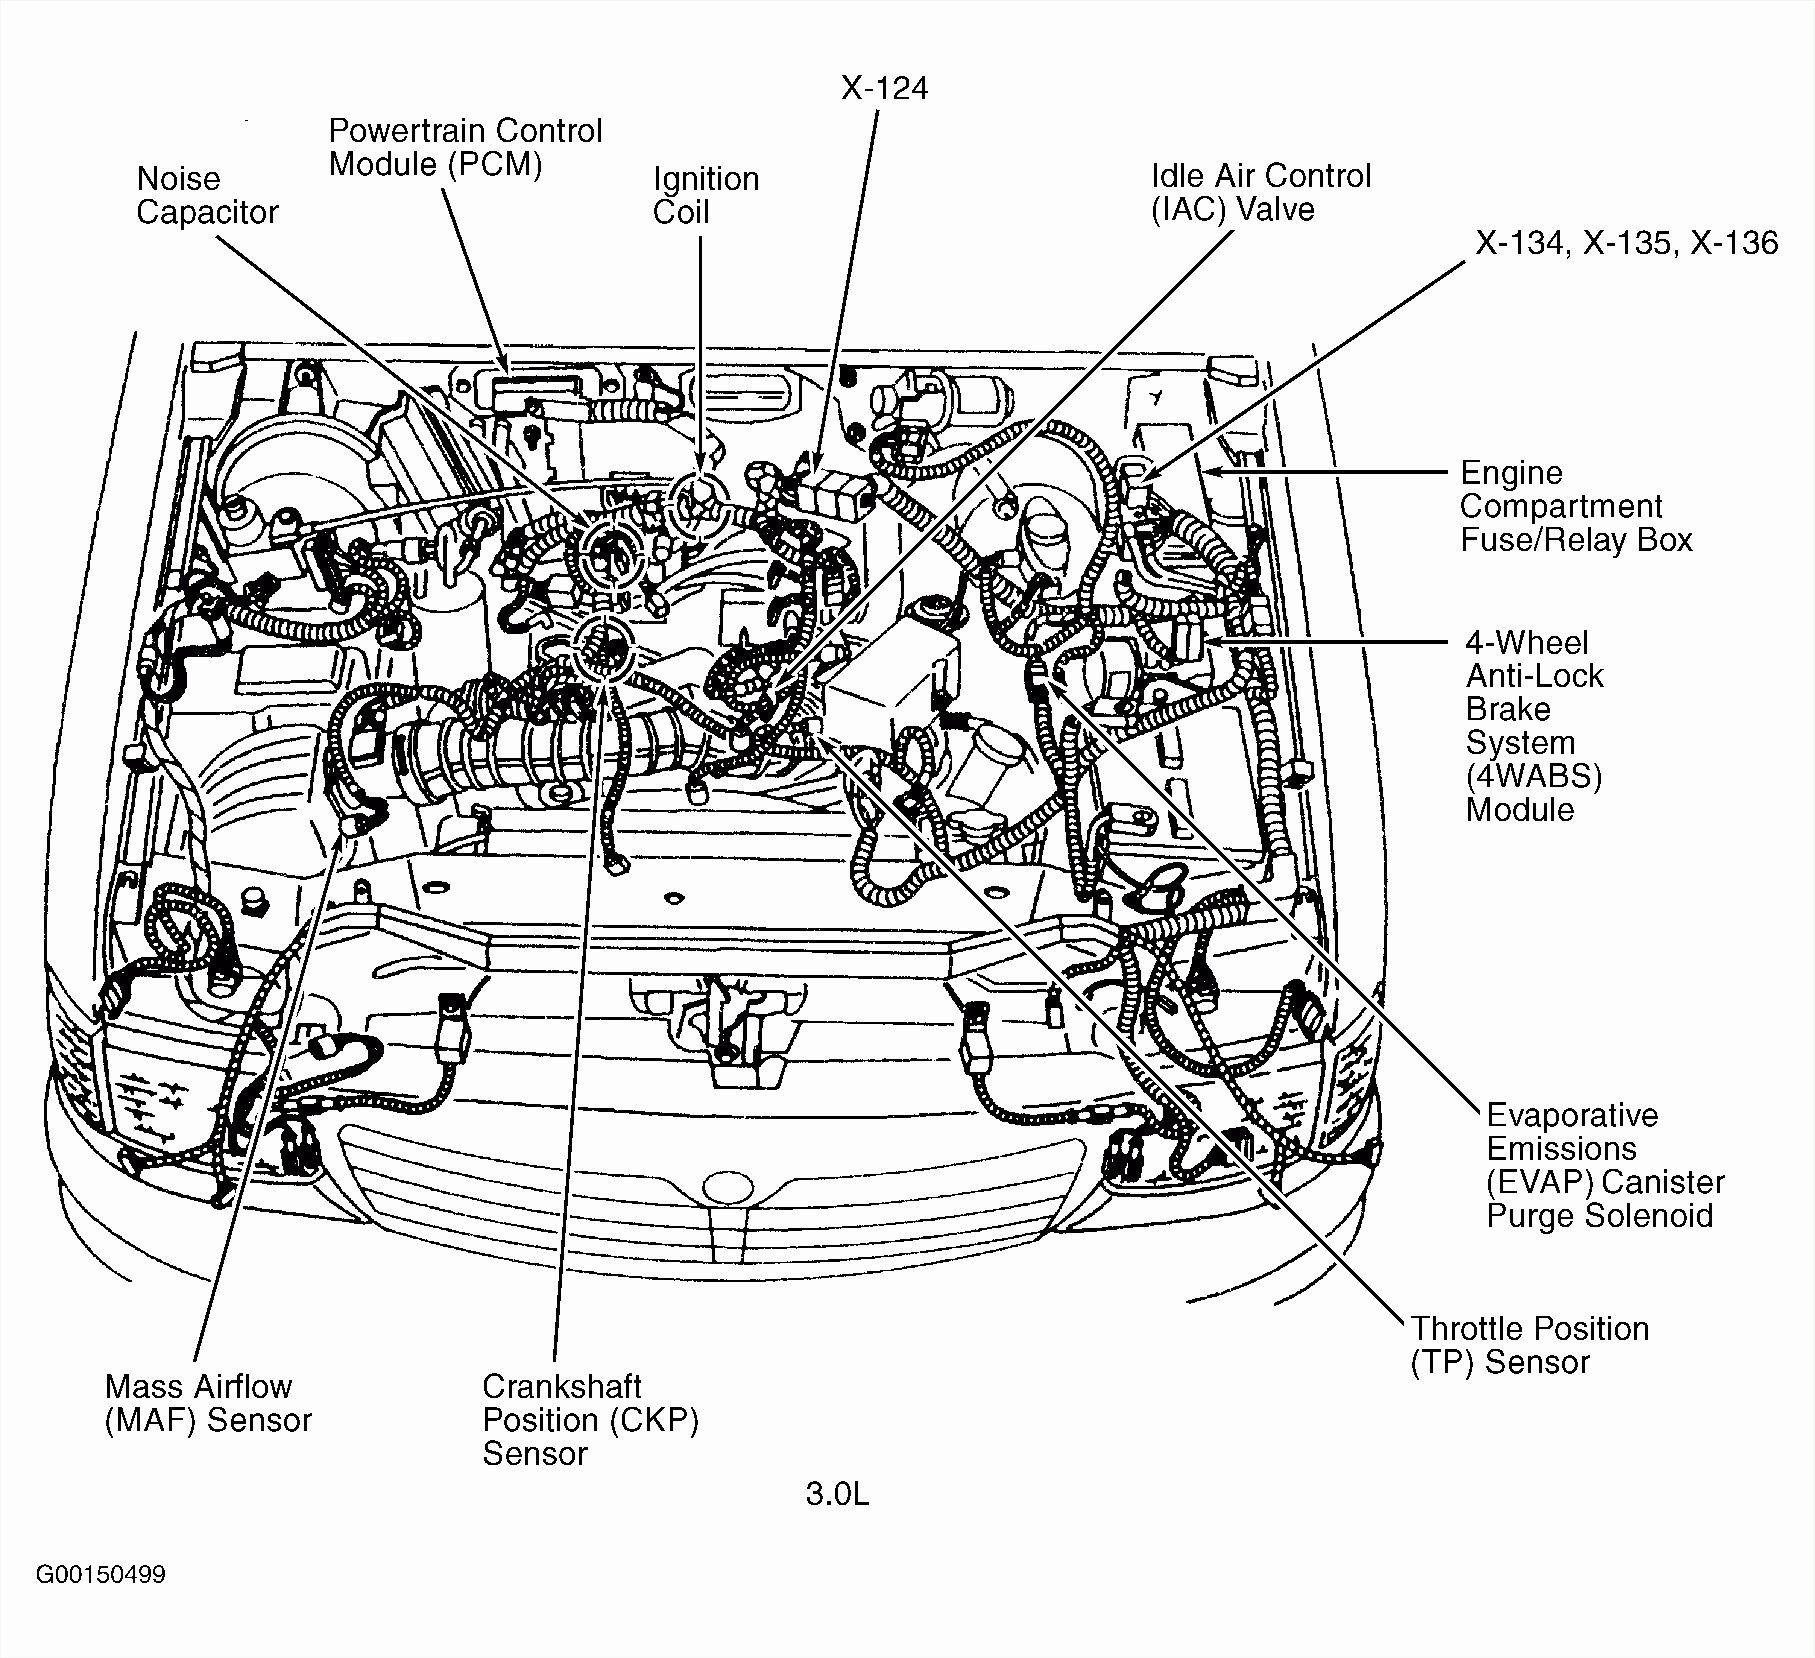 Ford F350 Parts Diagram ford V6 3 7 Engine Diagram Wiring Diagram Imp Of Ford F350 Parts Diagram